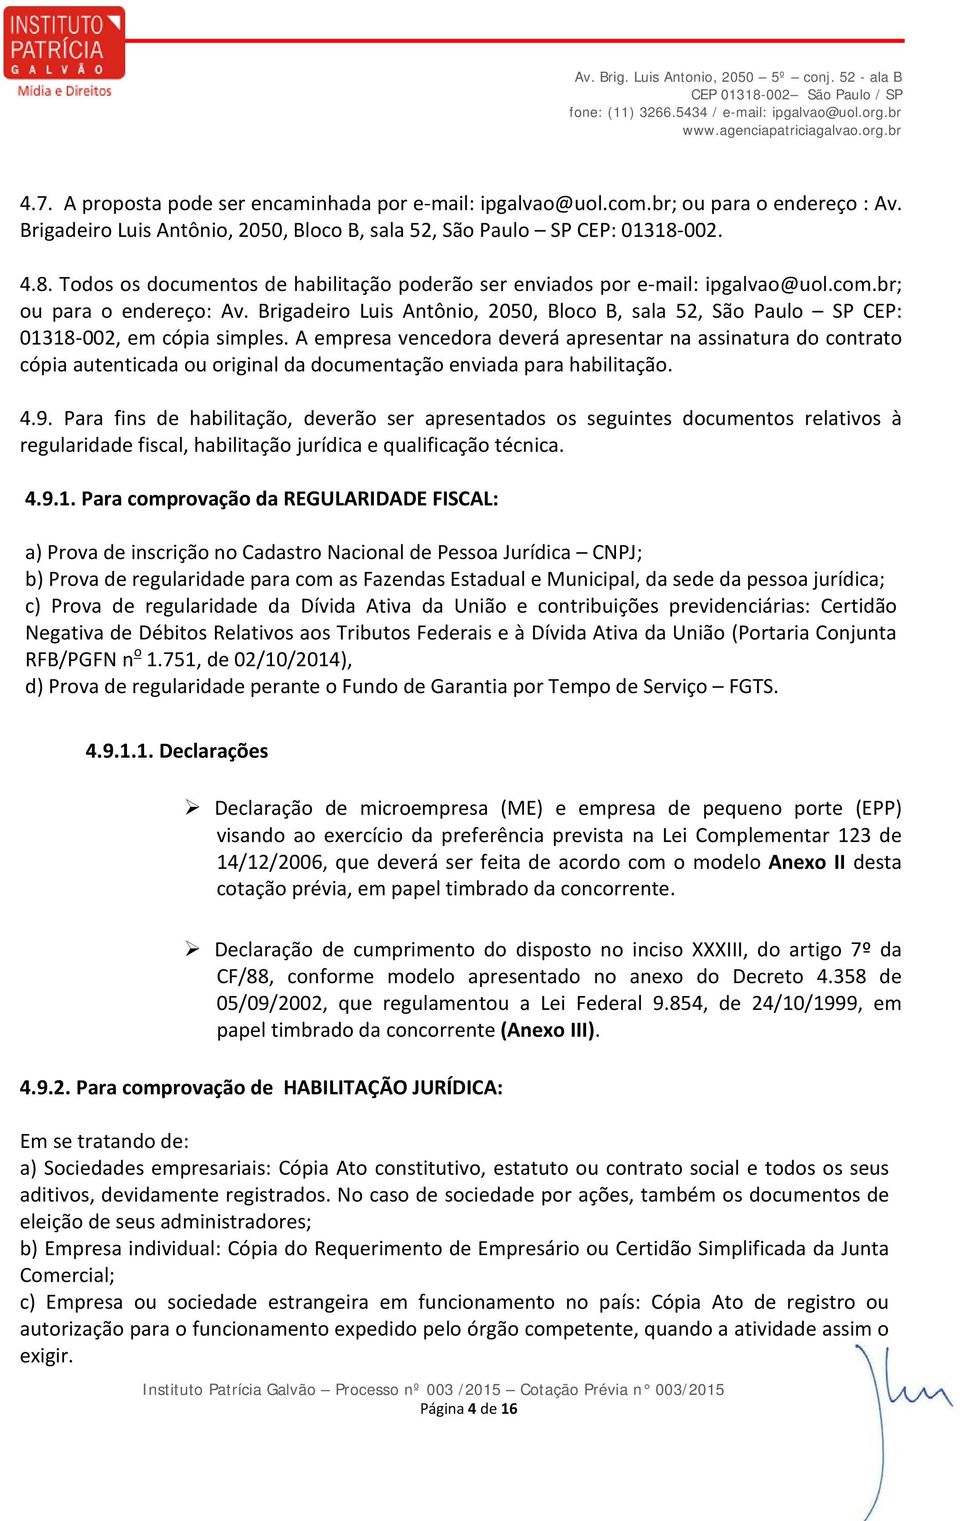 Brigadeiro Luis Antônio, 2050, Bloco B, sala 52, São Paulo SP CEP: 01318-002, em cópia simples.